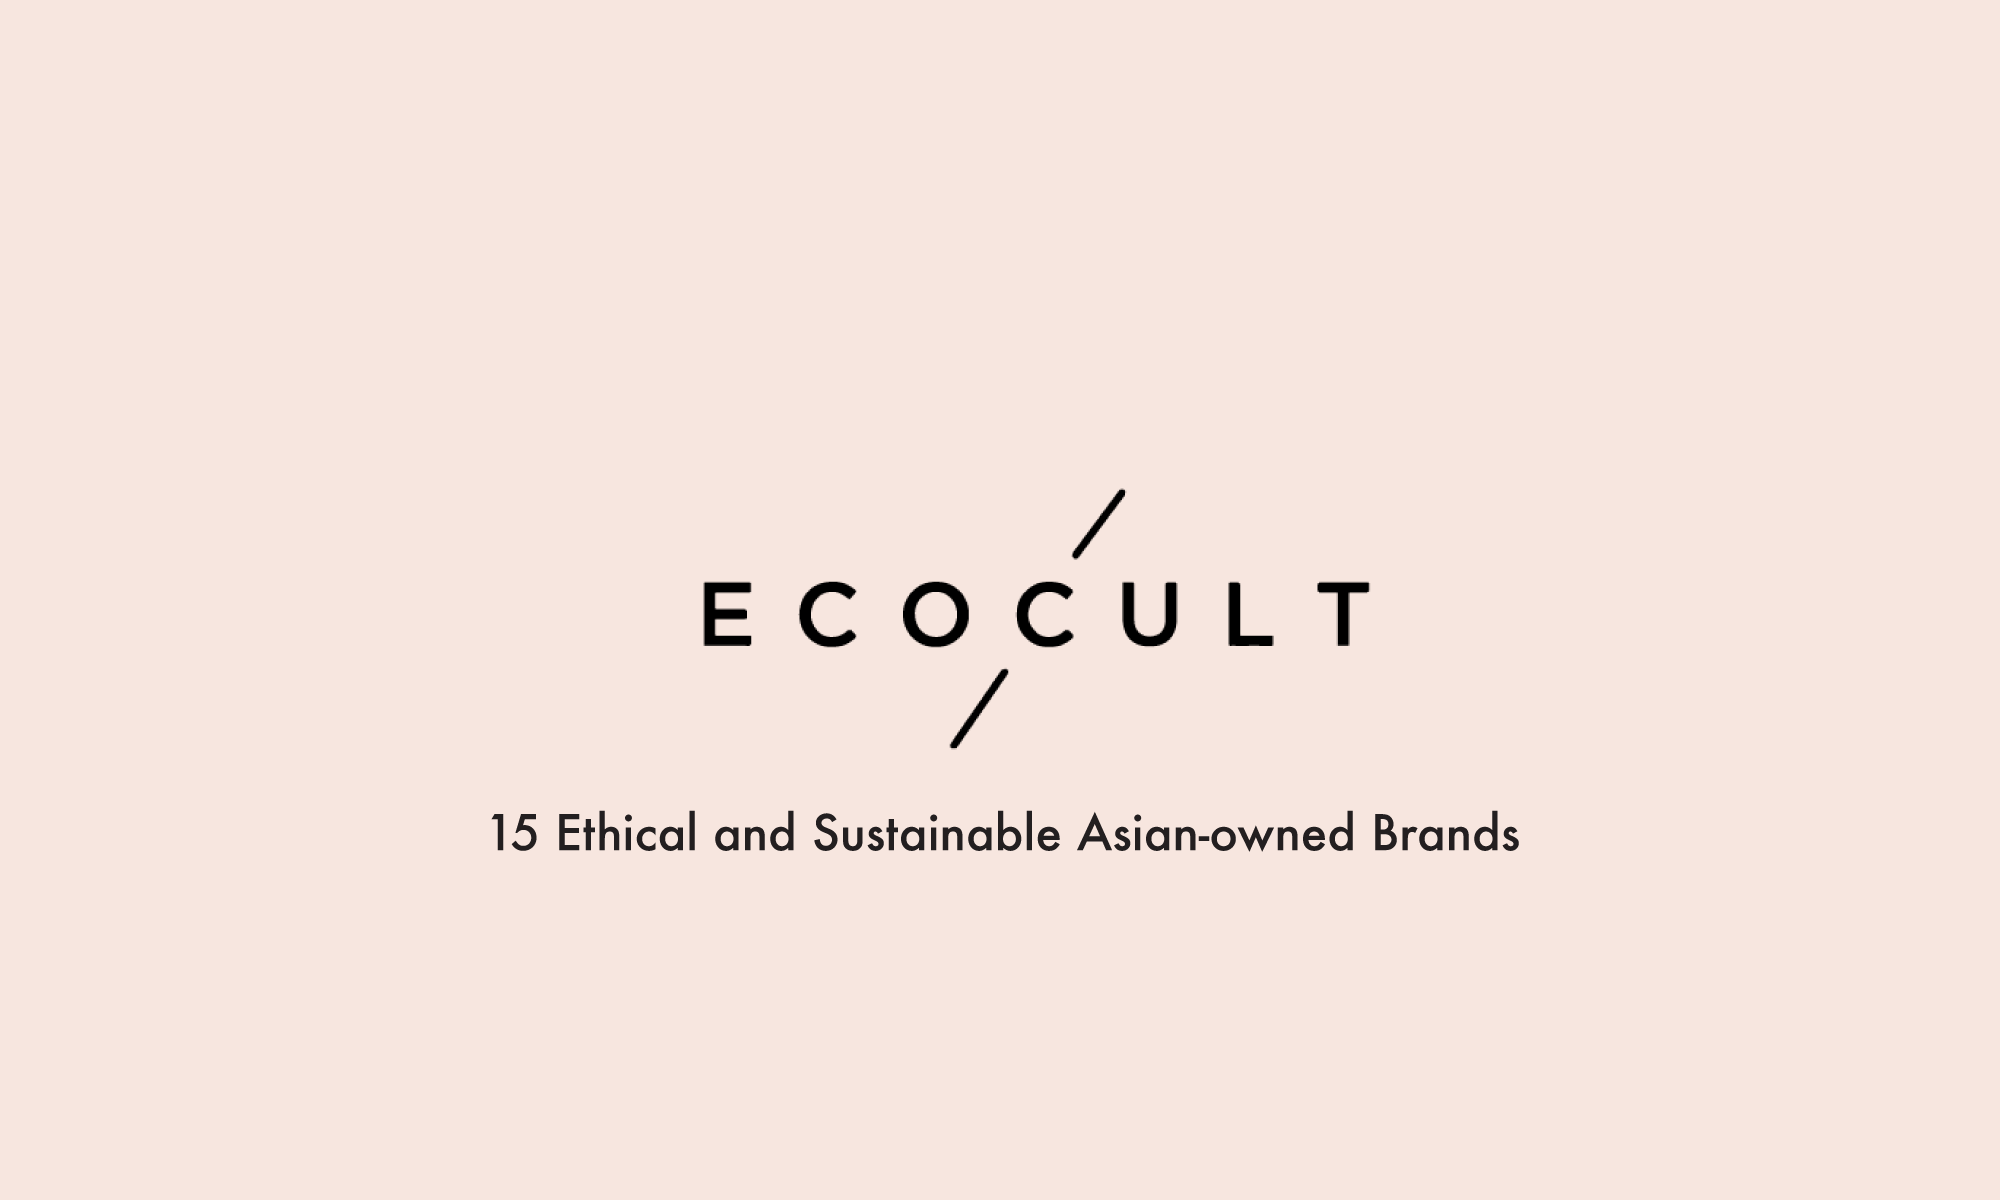 Ecocult